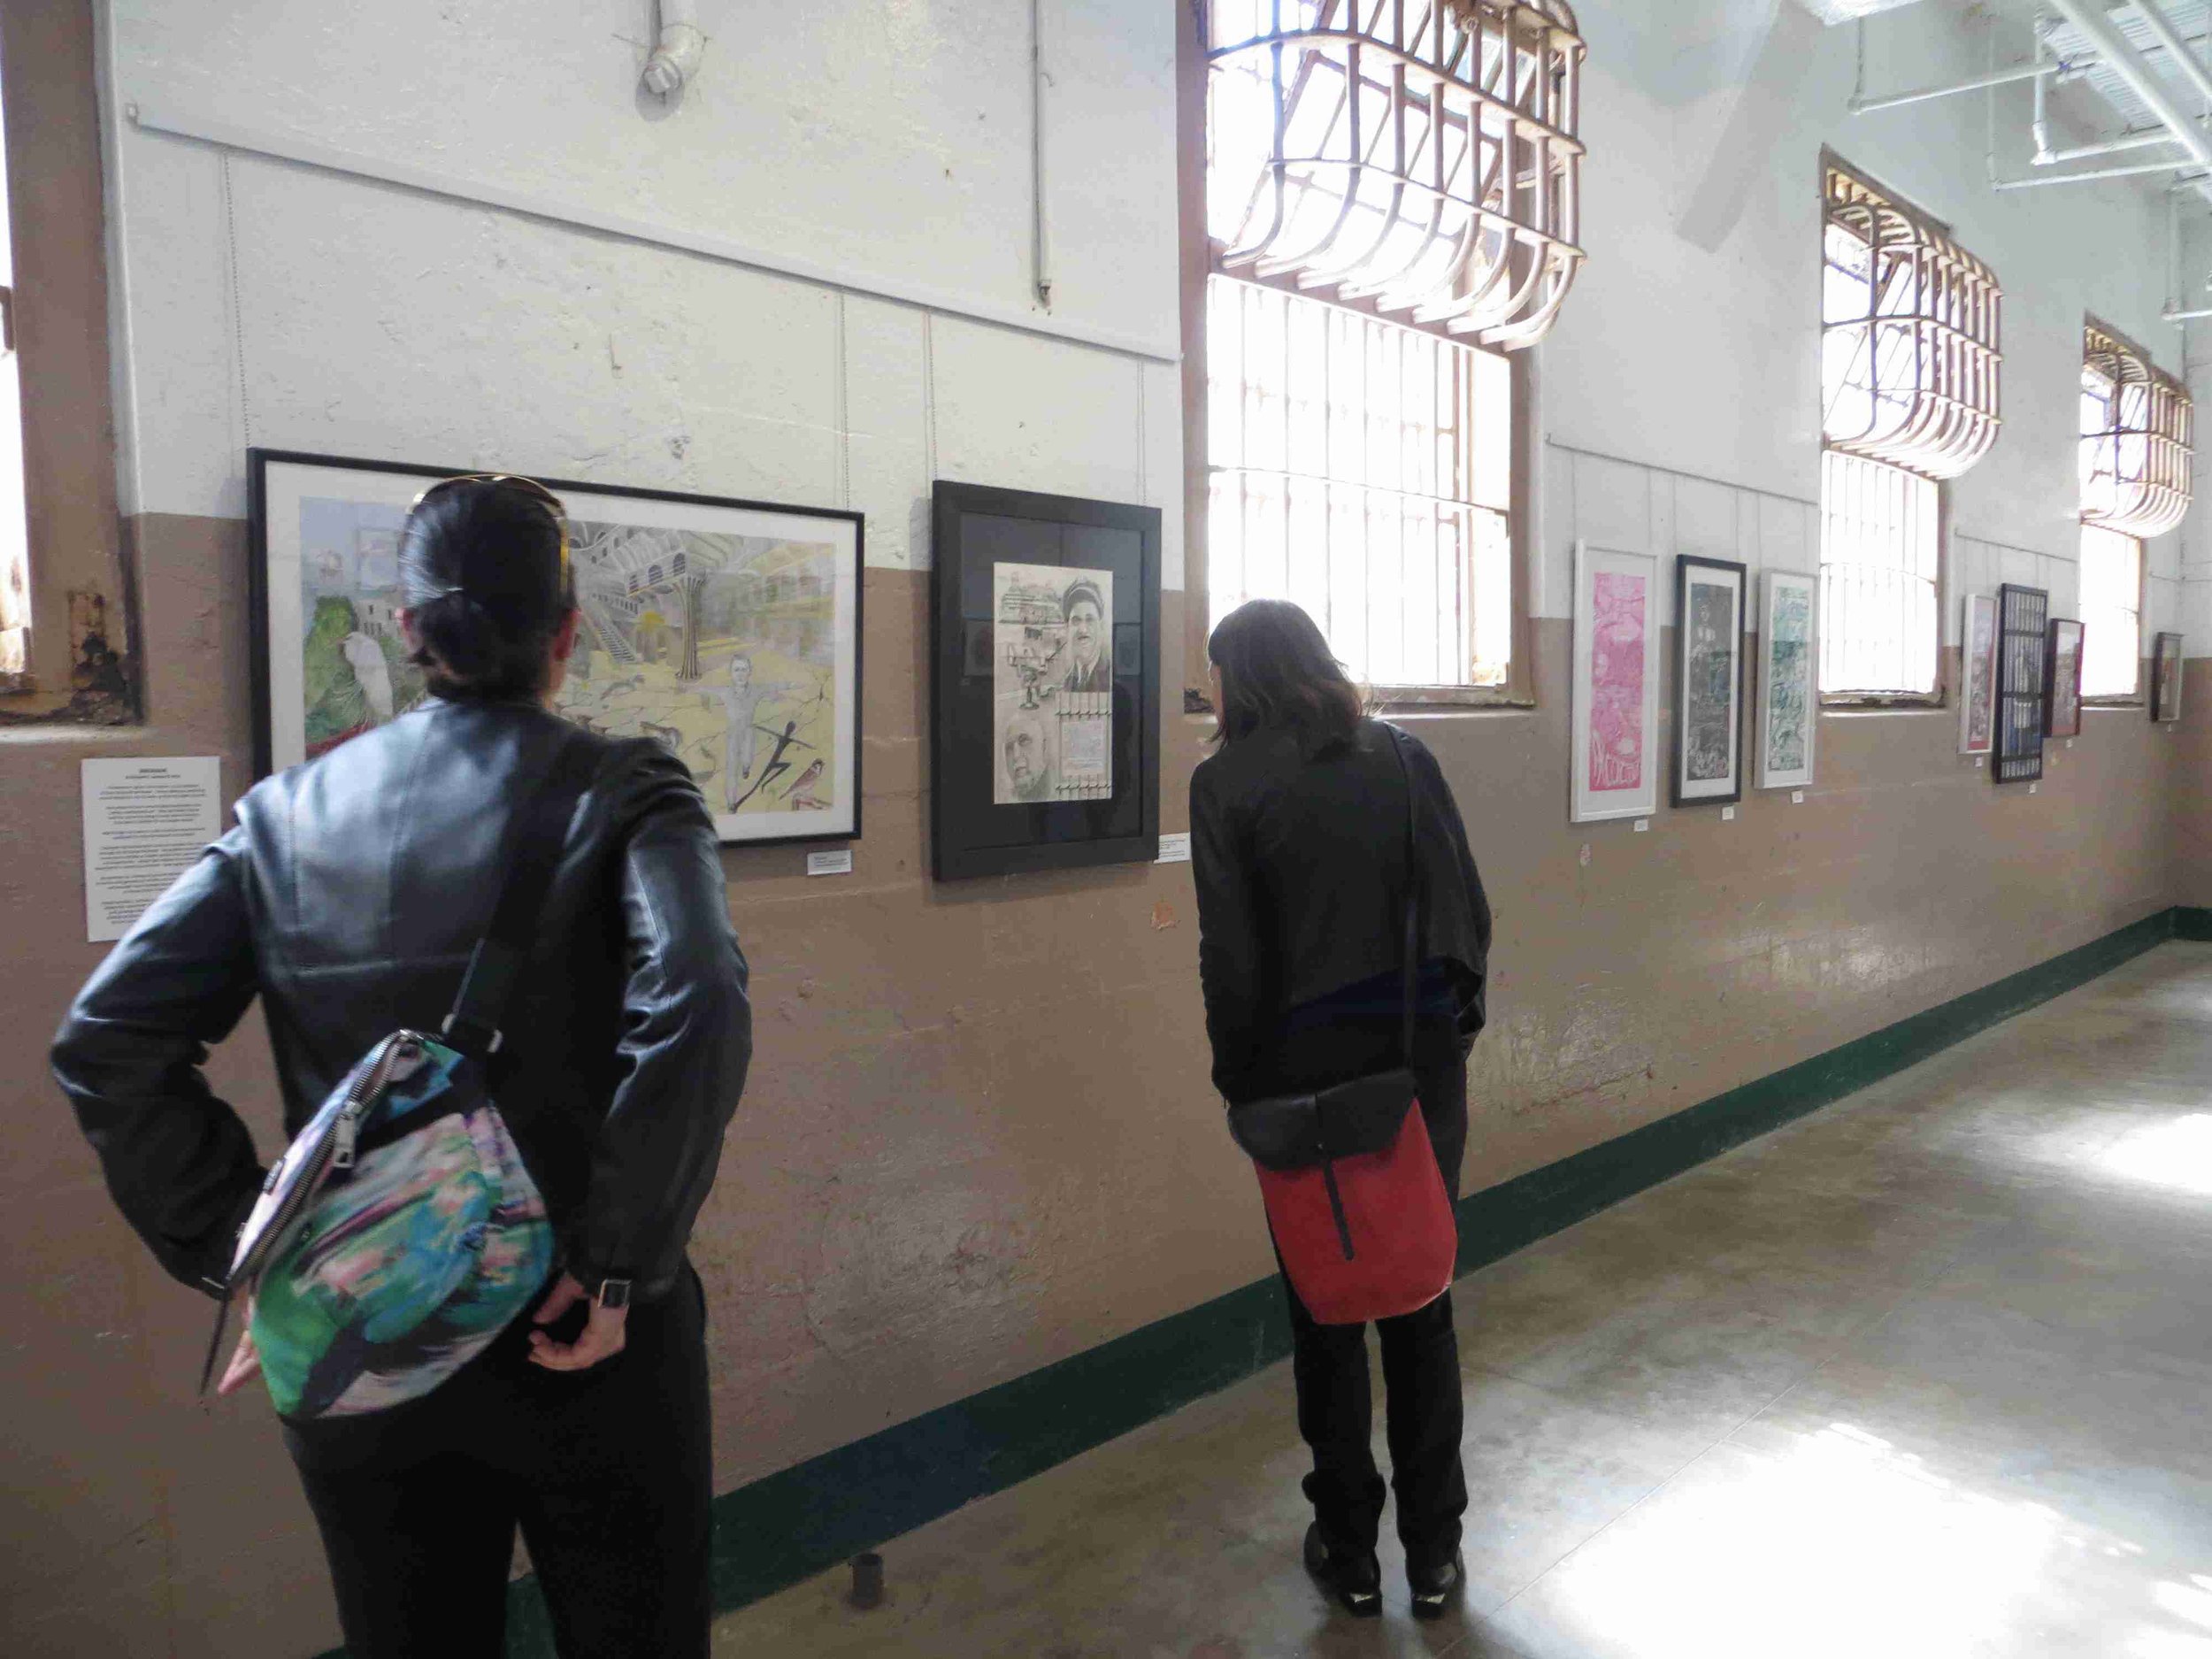 Lollypop Sundat at Alcatraz Band Practice Room-Int'l visitors held captive by art at Alcatraz (2).jpg